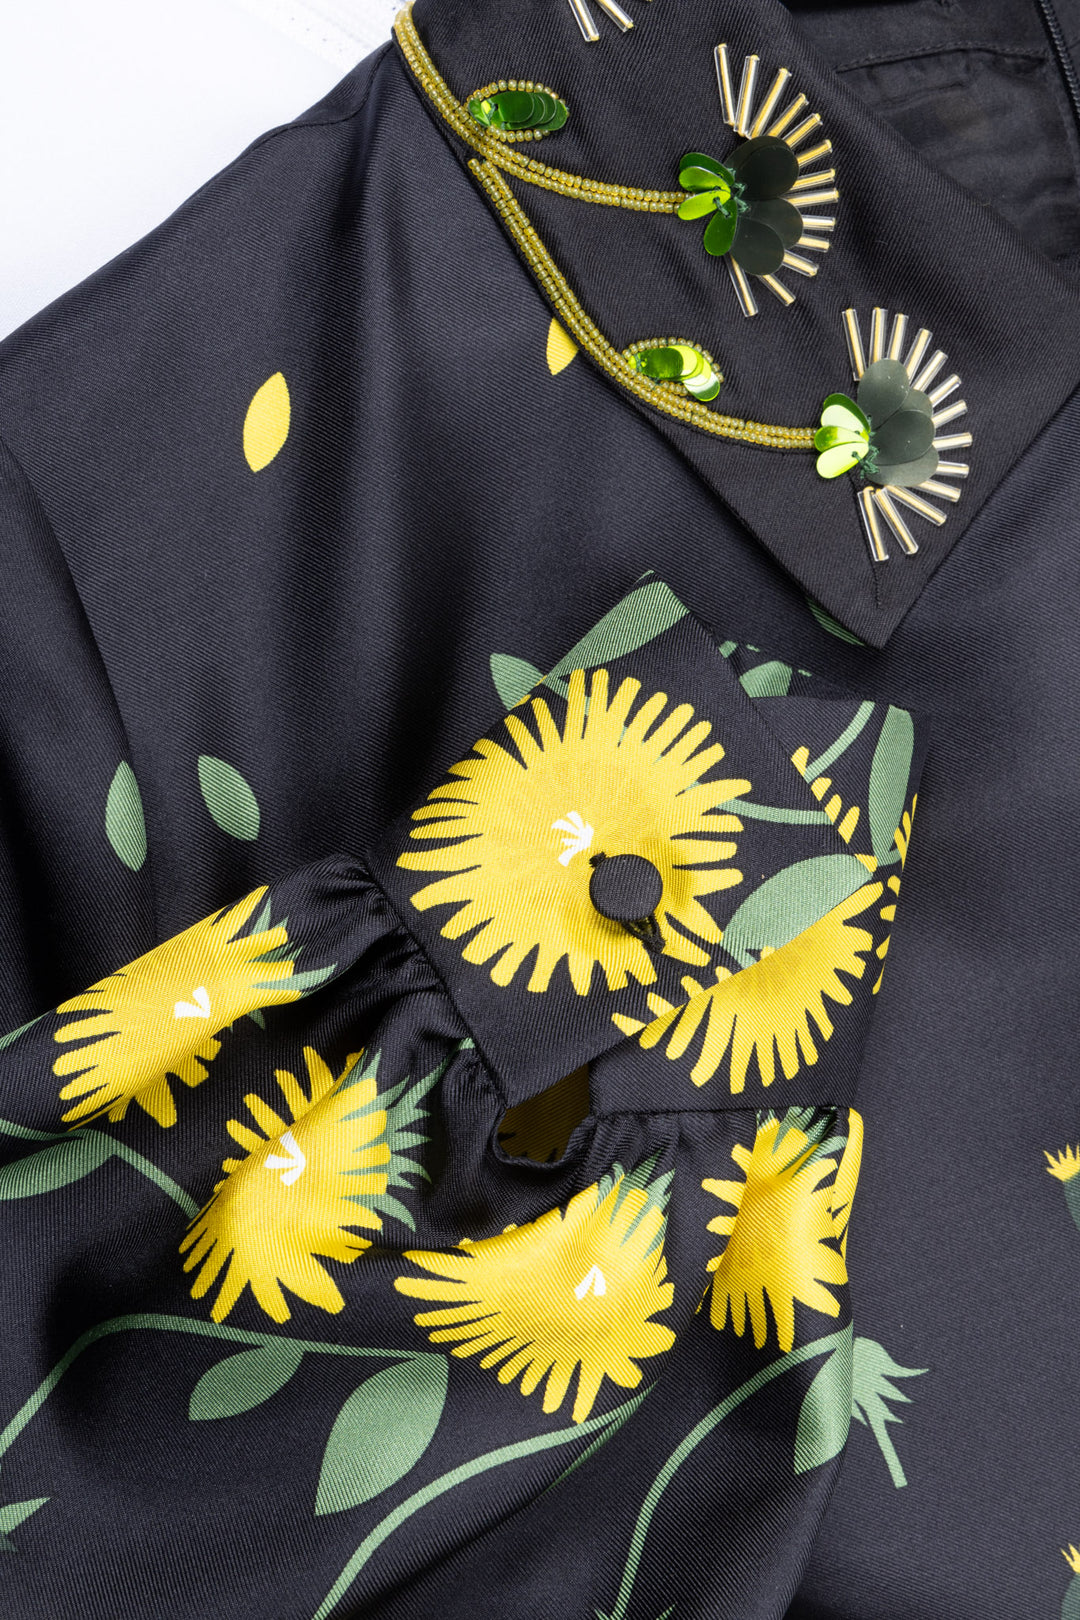 VALENTINO Sunflower Pleated Dress Silk Black